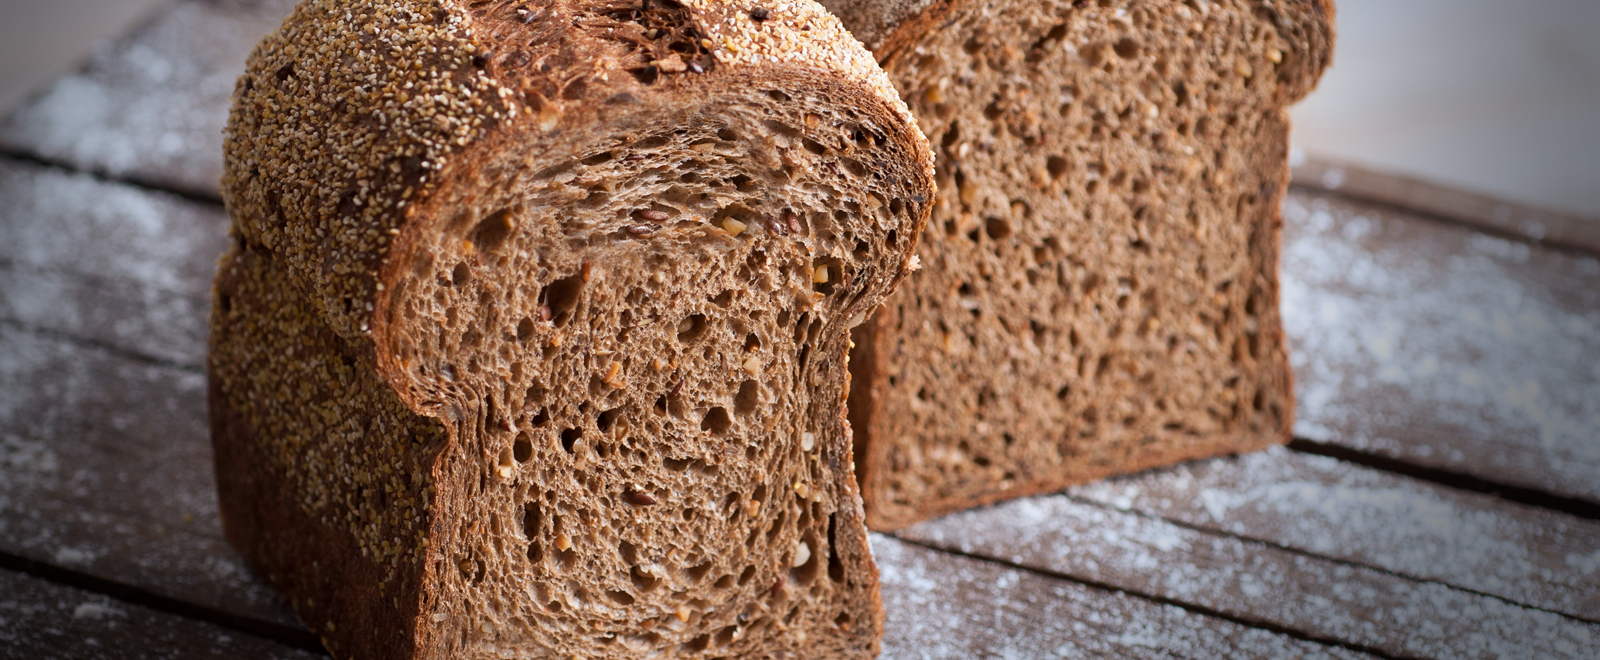 Recept_BR_6189-Tarwe Busbrood laag in koolhydraten